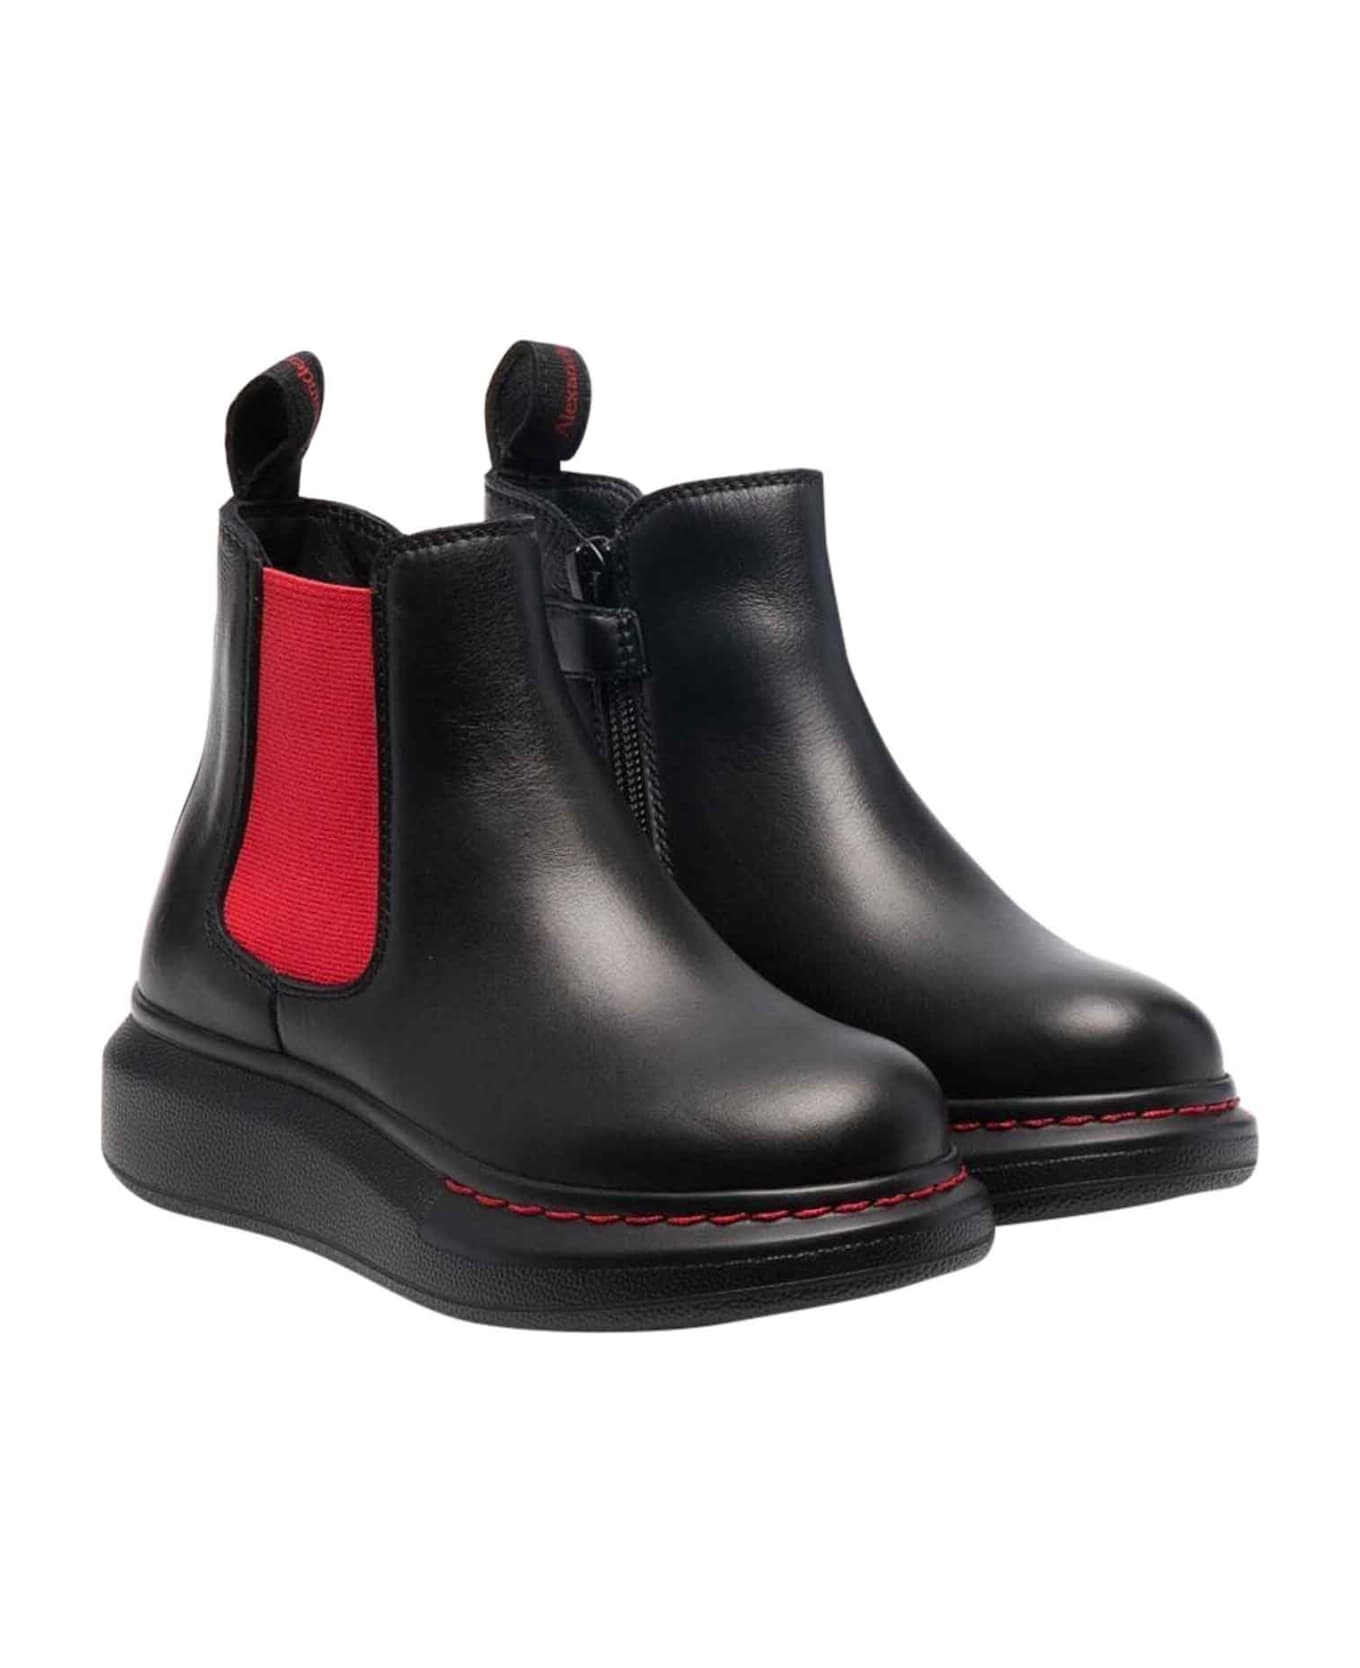 Alexander McQueen Kids Unisex Black Ankle Boots - Nero/rosso